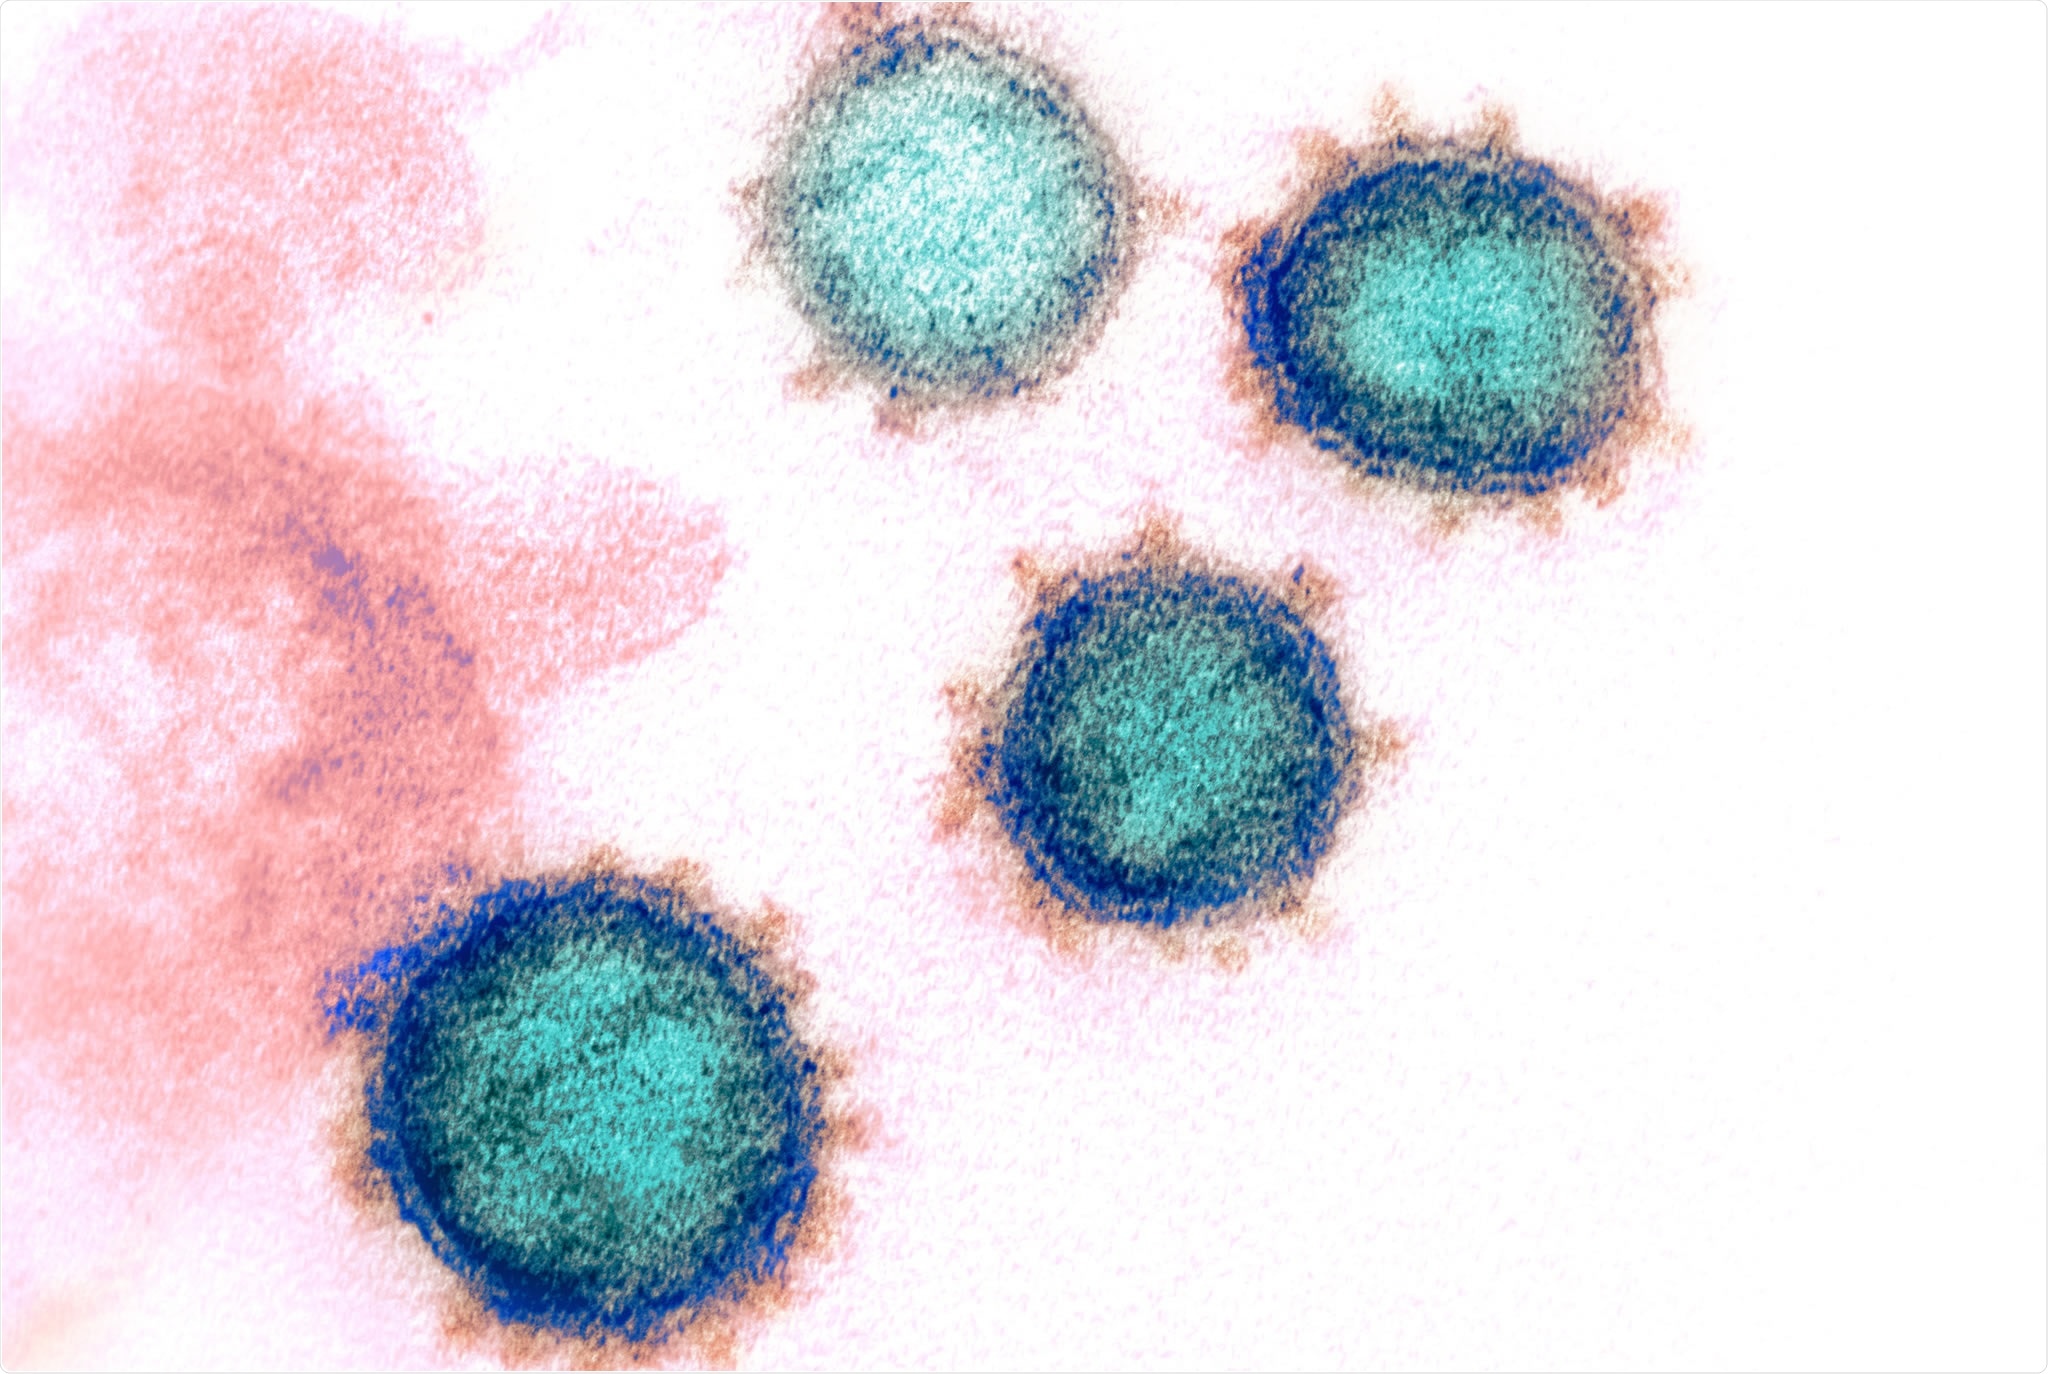 Study: SARS-CoV-2 can recruit a heme metabolite to evade antibody immunity. Image Credit: NIAID